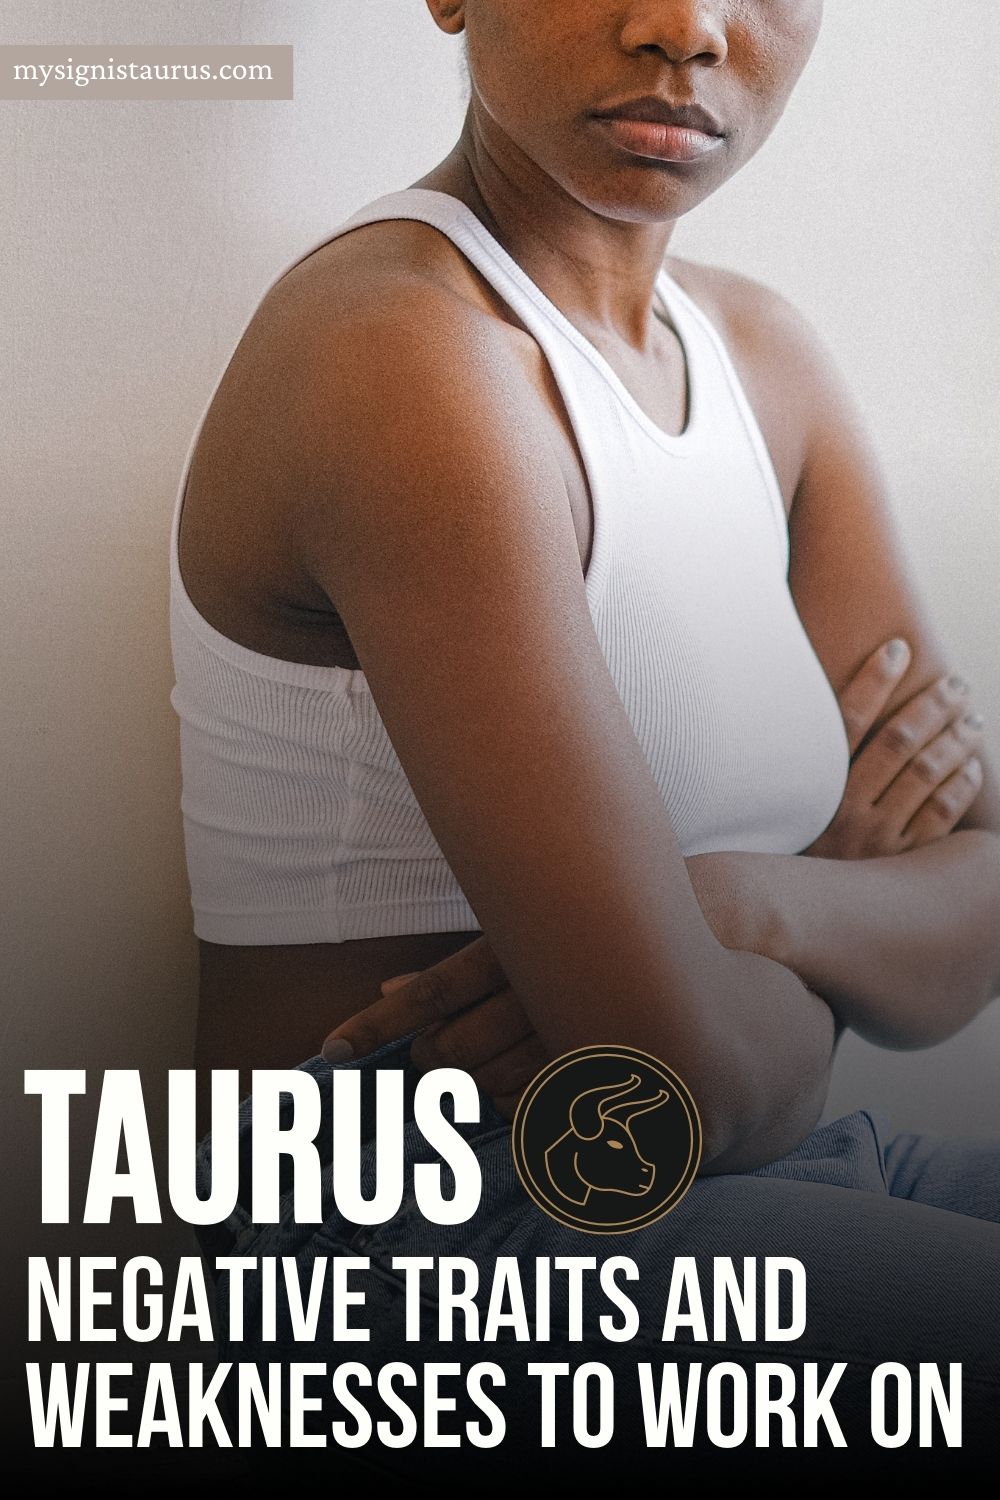 Taurus woman weakness